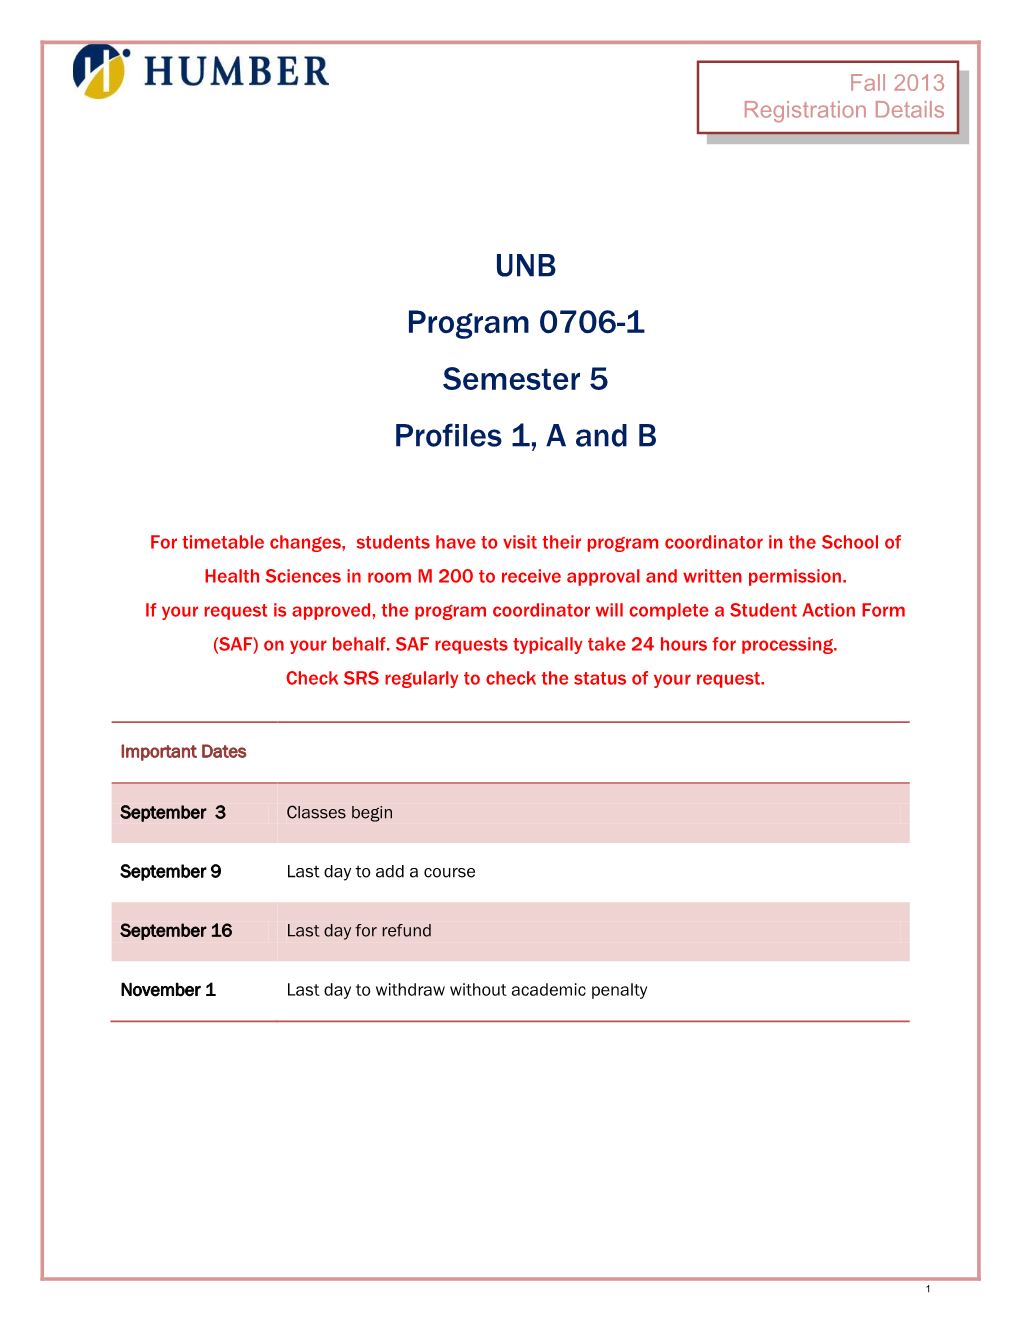 UNB Program 0706-1 Semester 5 Profiles 1, a and B